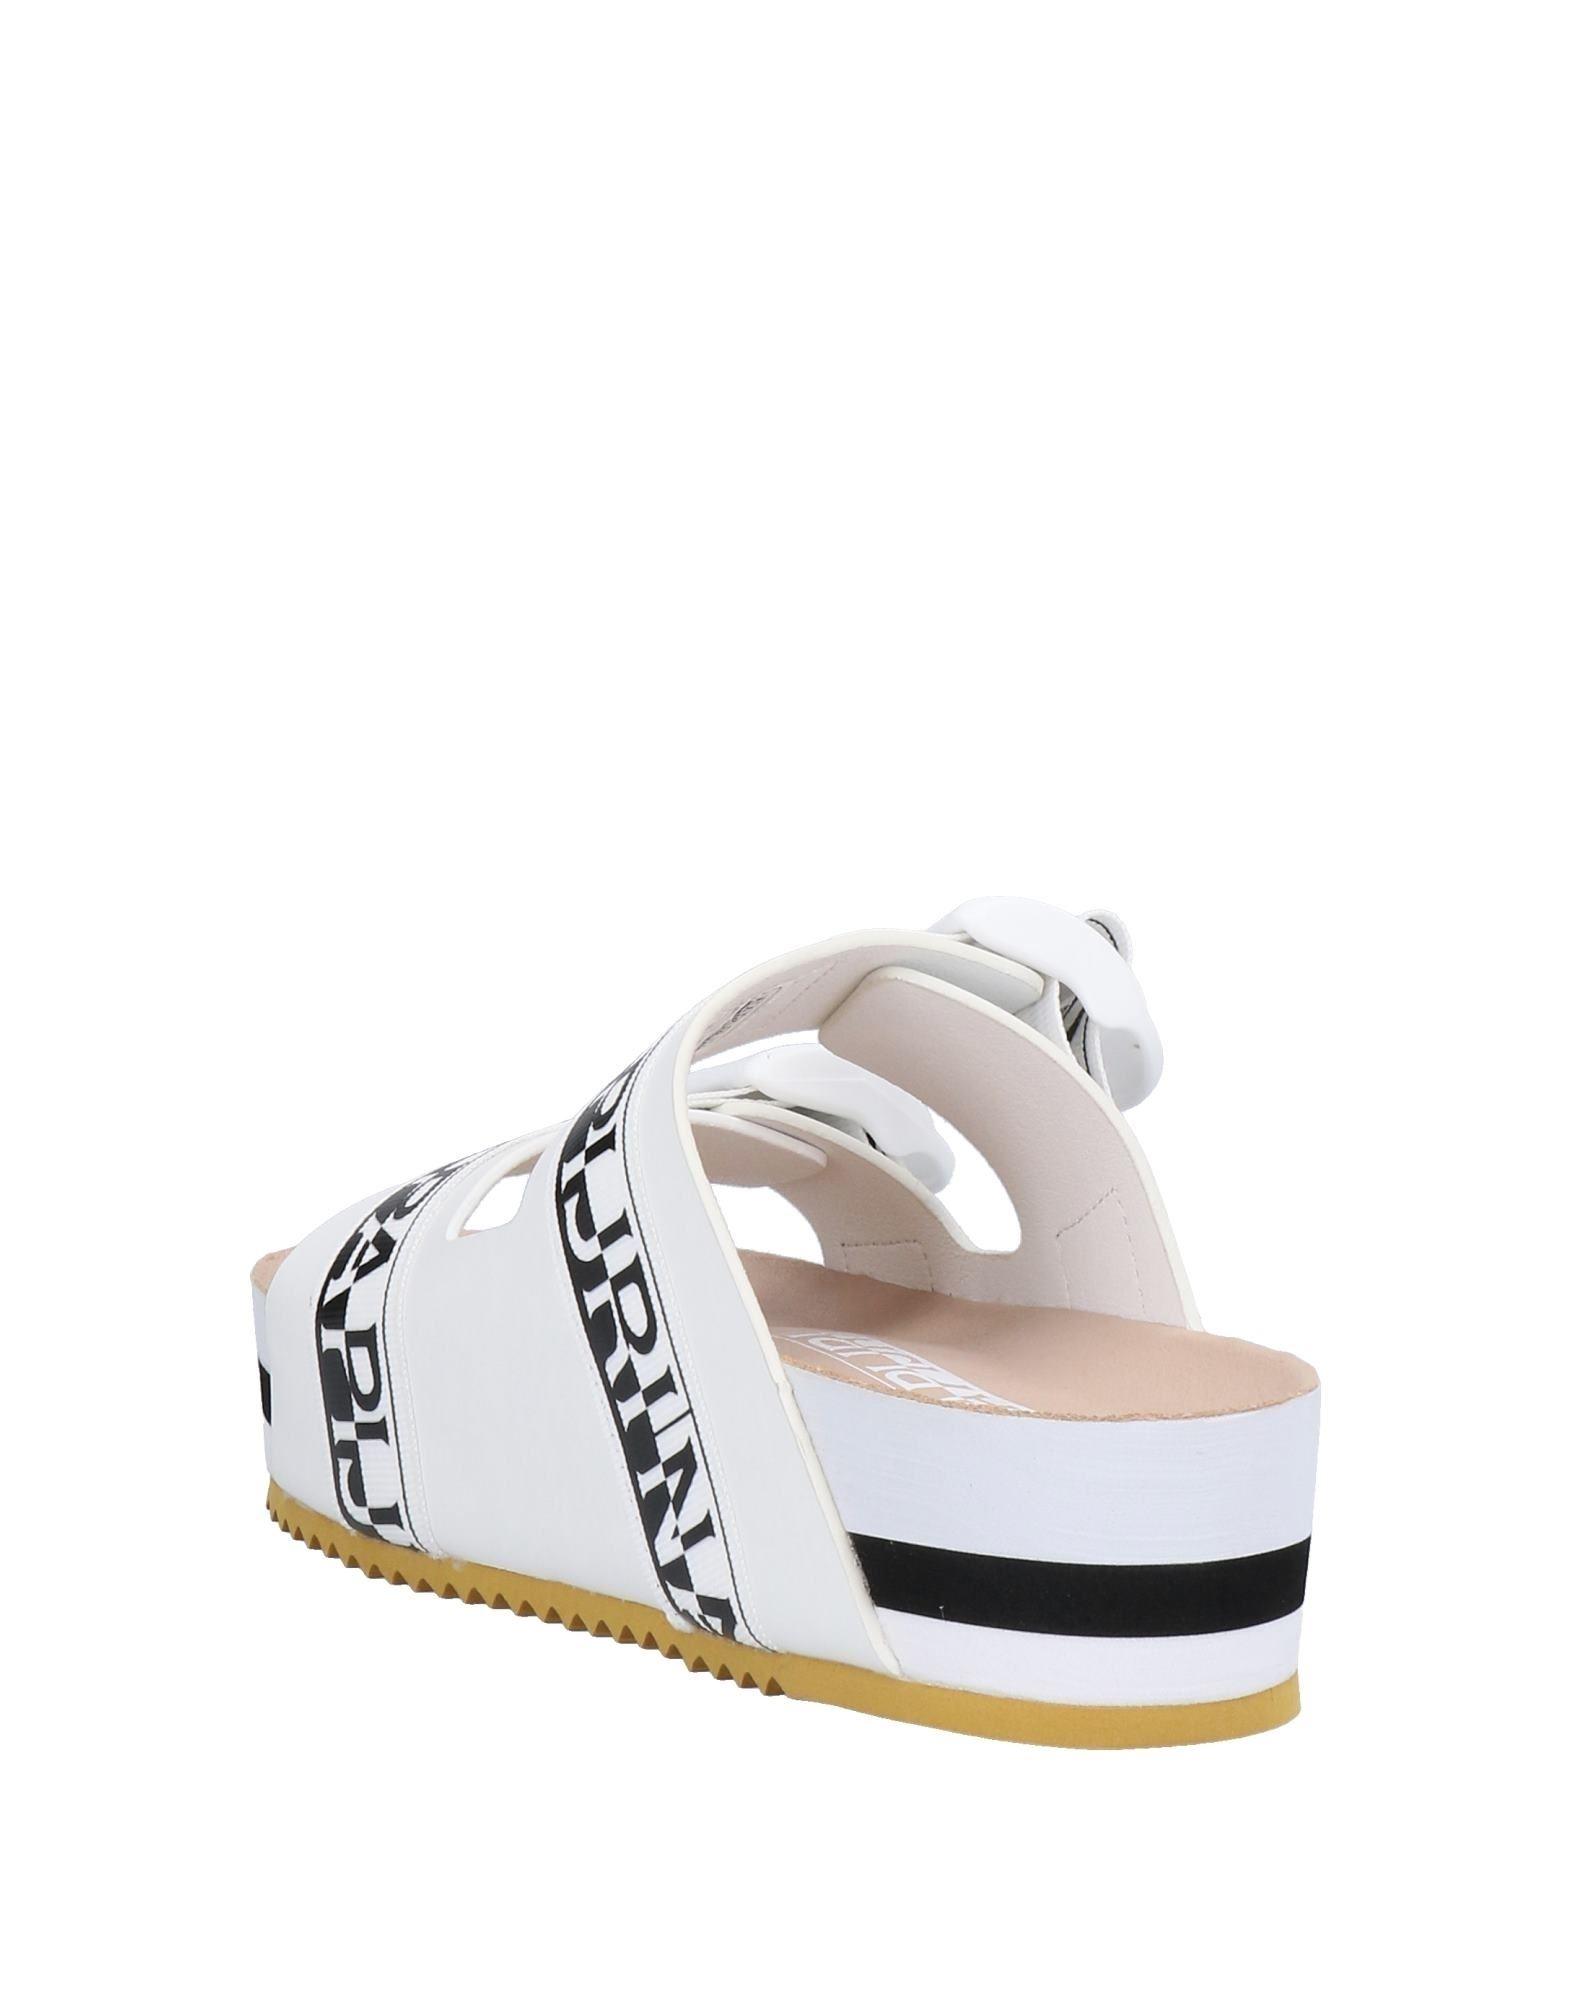 Napapijri Rubber Sandals in White | Lyst